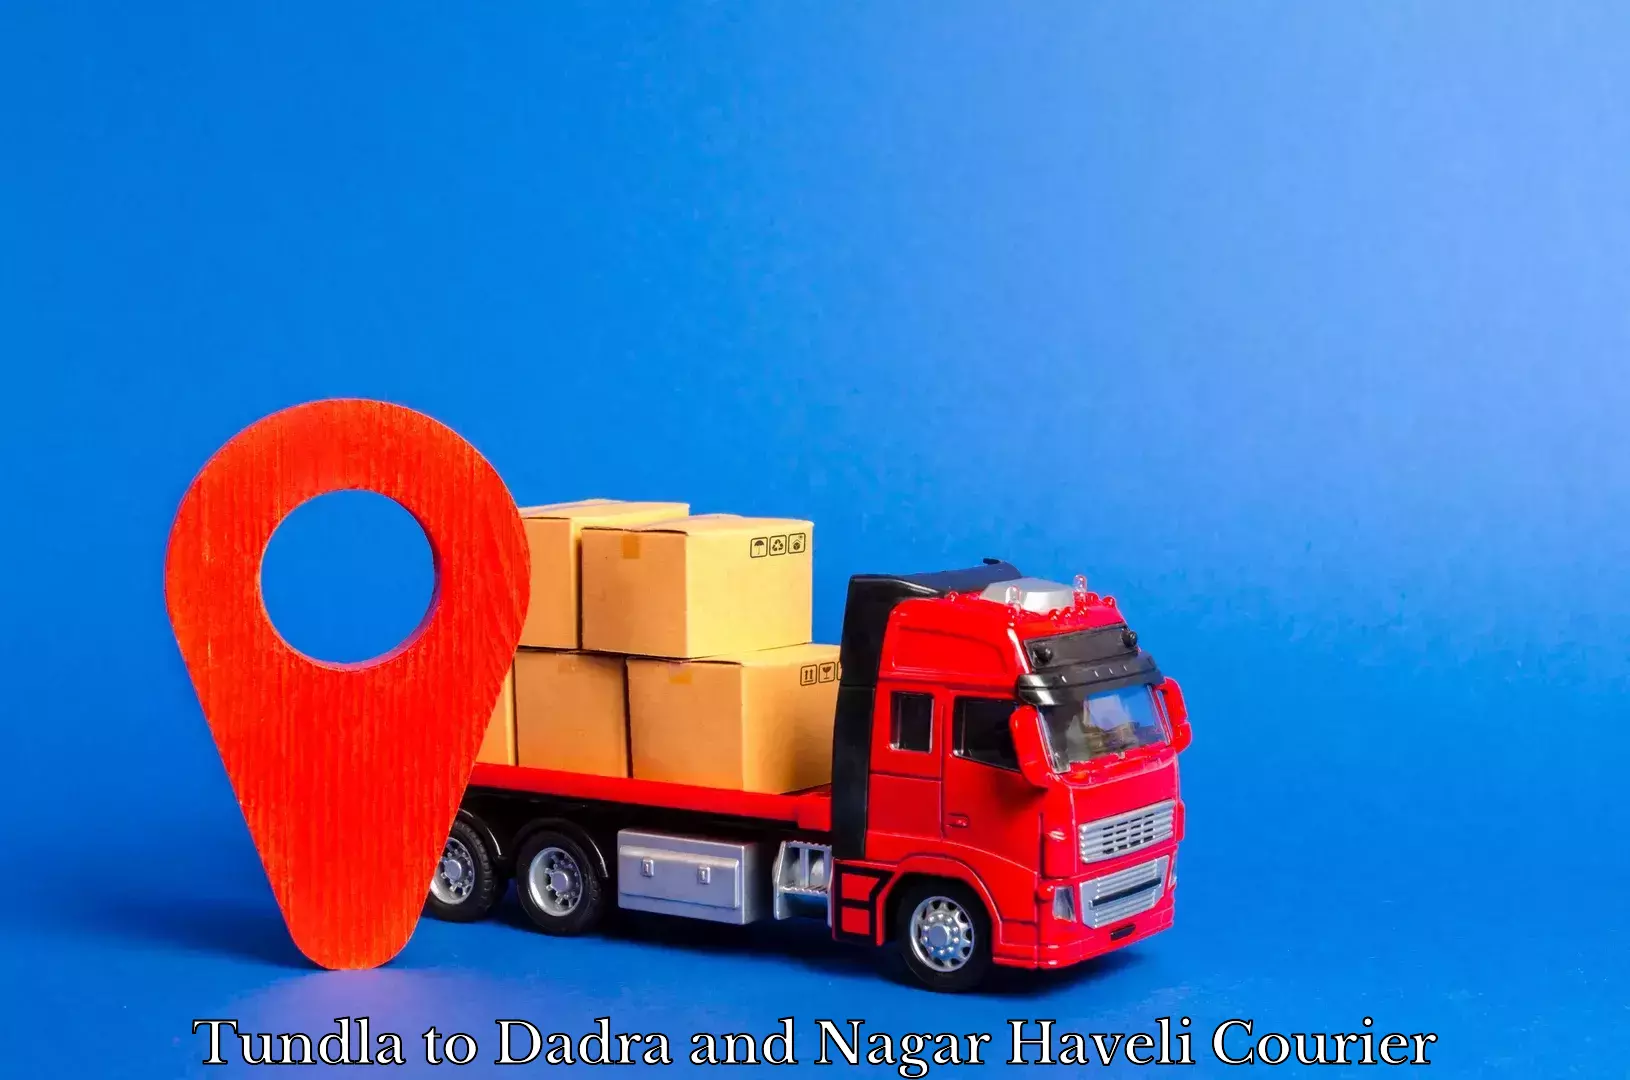 Courier service innovation Tundla to Dadra and Nagar Haveli